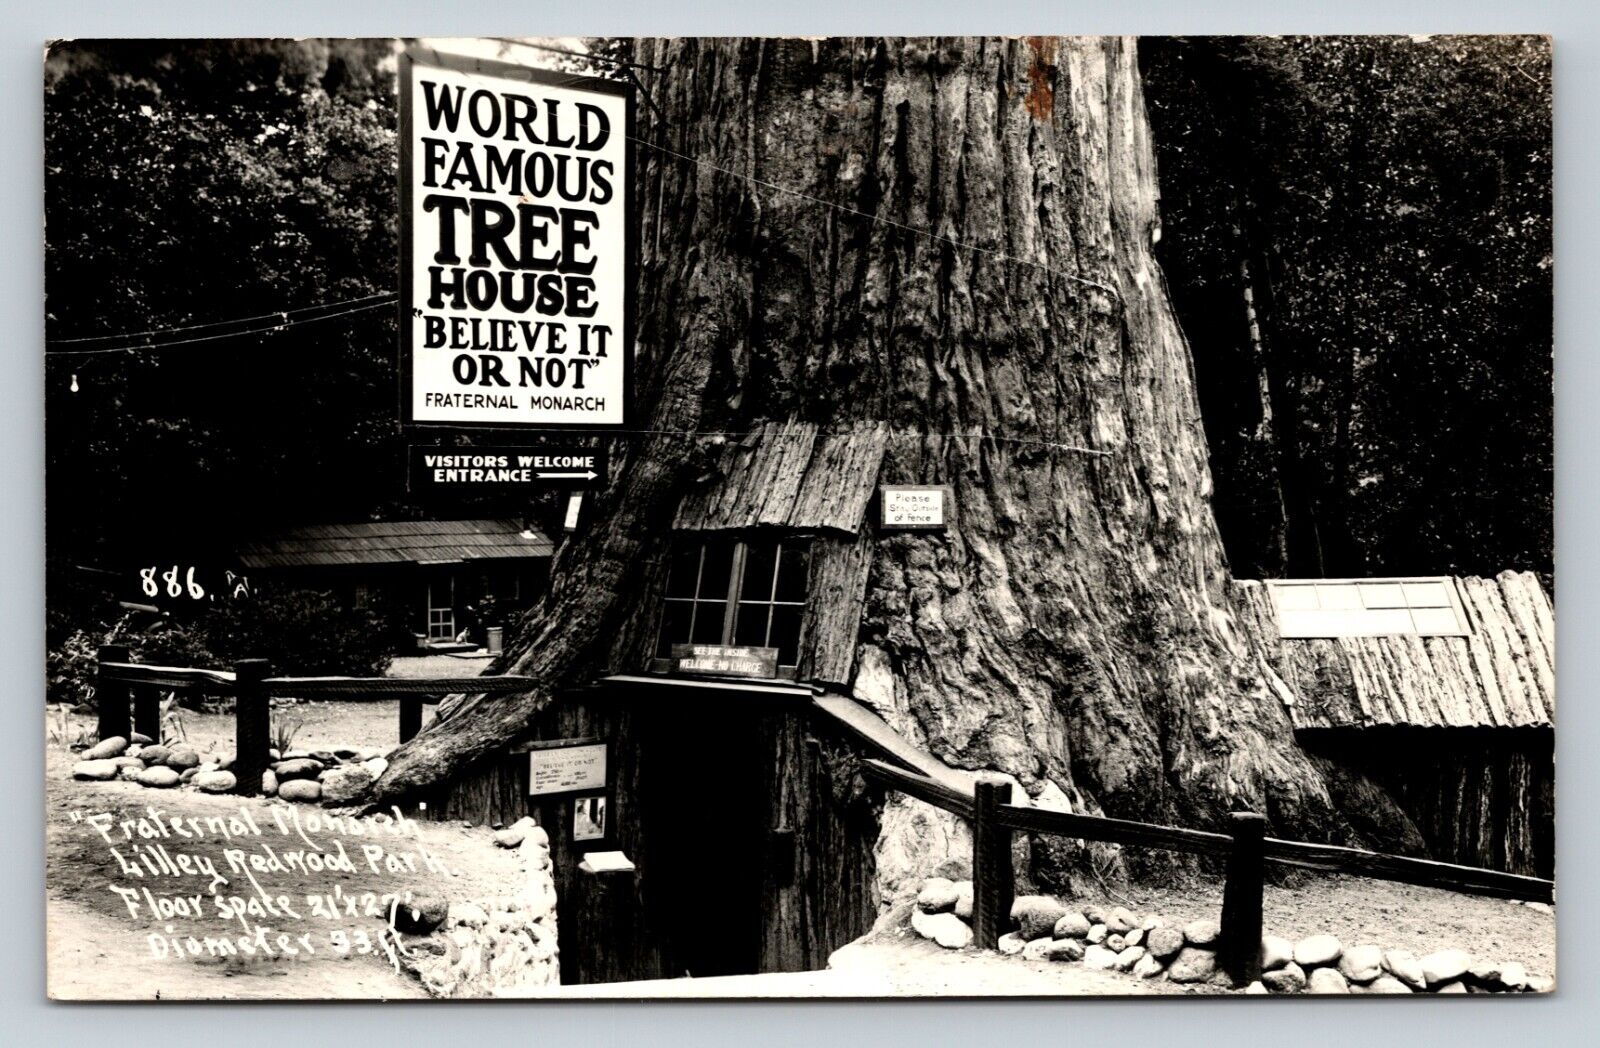 c1948 RPPC World Famous Tree House Lilley Redwood Park CA Vintage Postcard w Msg